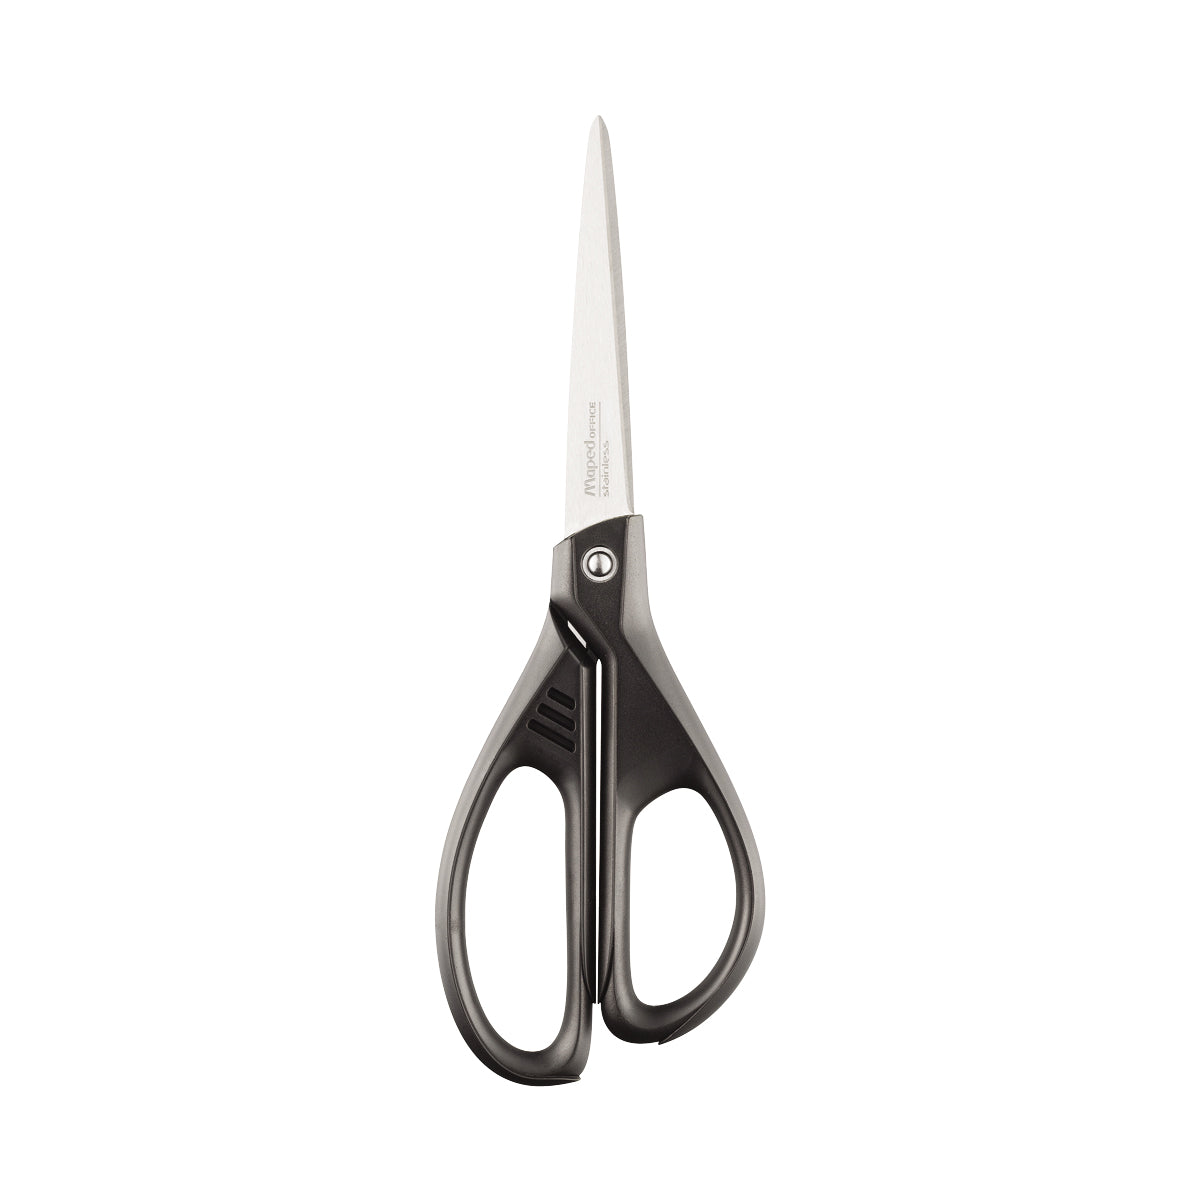 Maped Essential Scissors -21cm Stainless Steel Blade- UAE